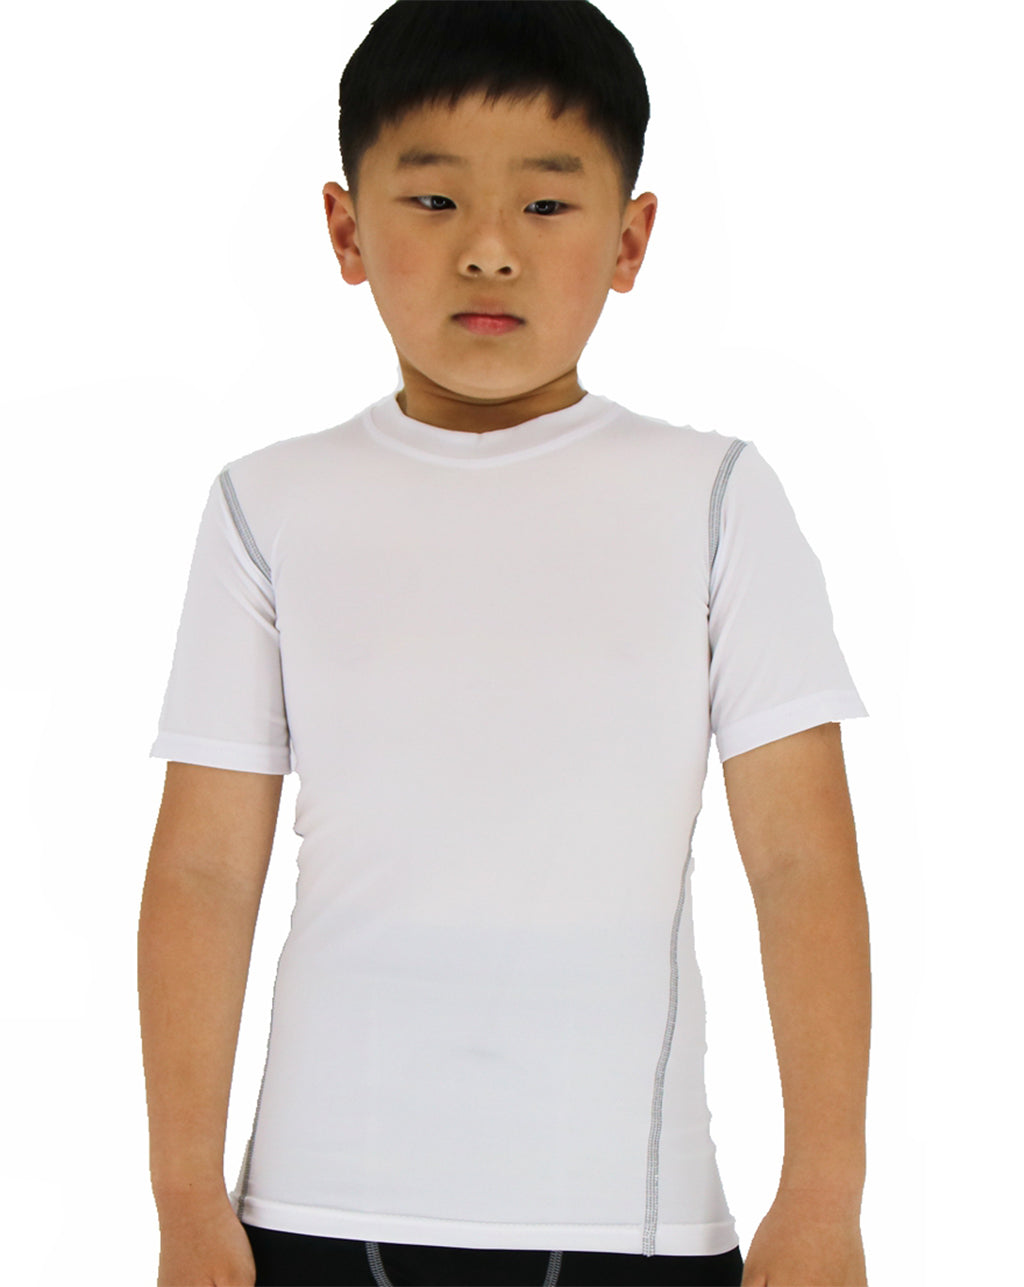 LANBAOSI Boys Football Base Layer Top, Kids Compression Top Shirts